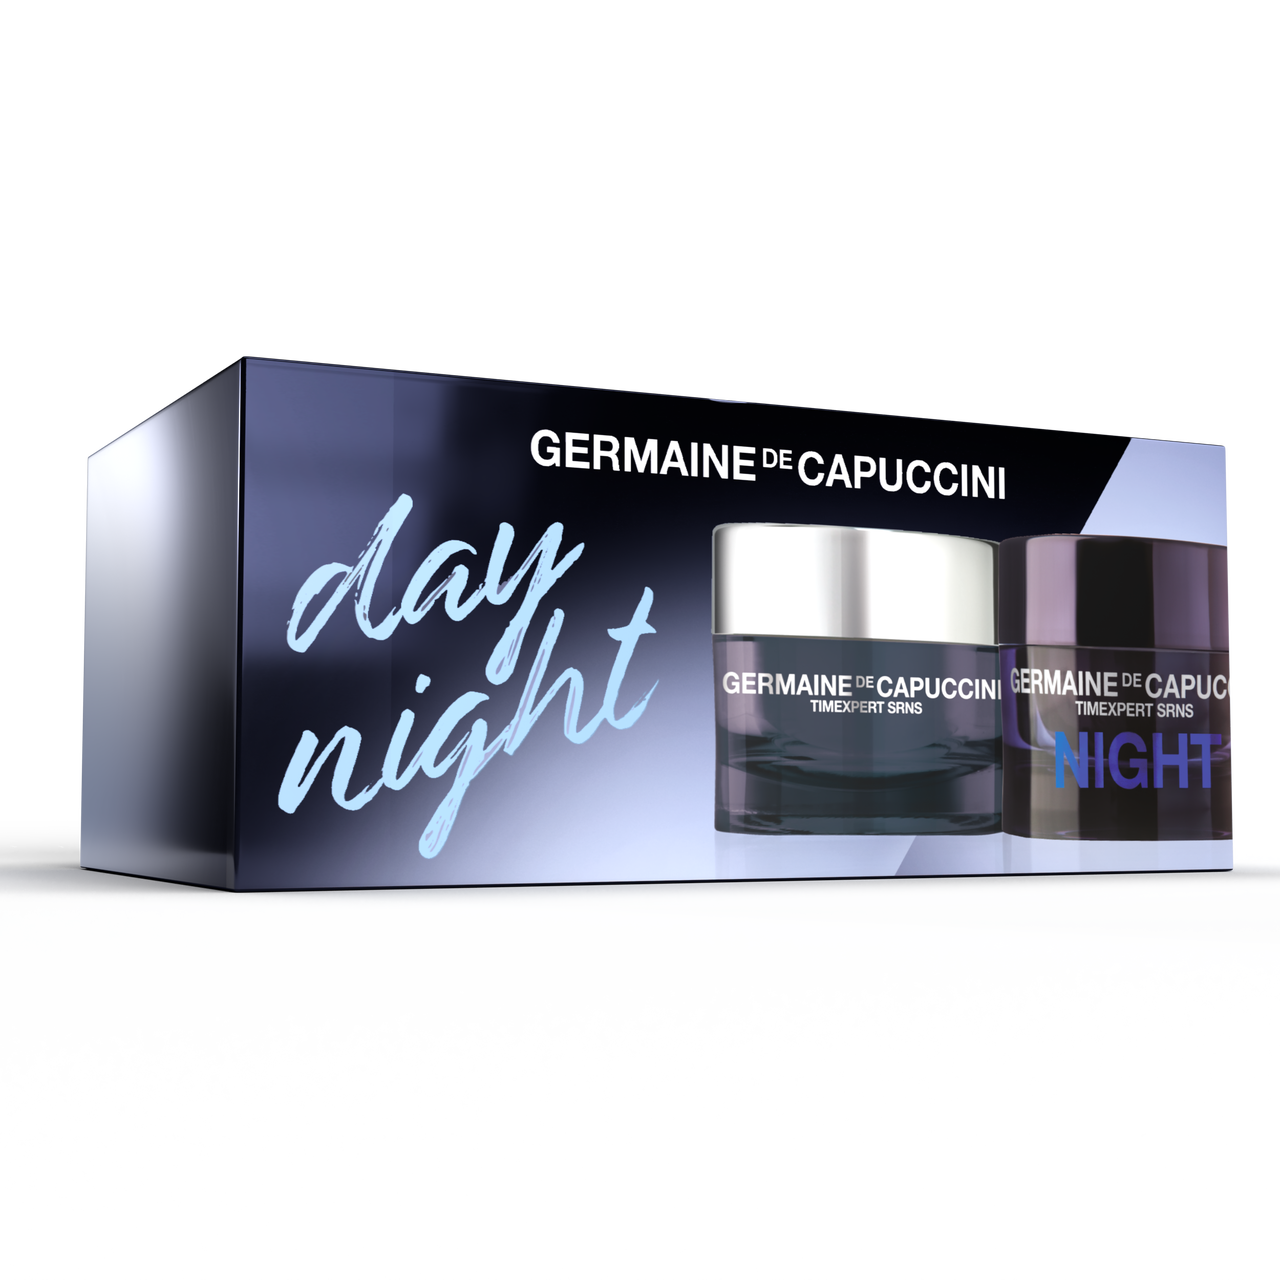 GERMAINE DE CAPUCCINI TIMEXPERT SRNS CREAM DUO (DAY + NIGHT)